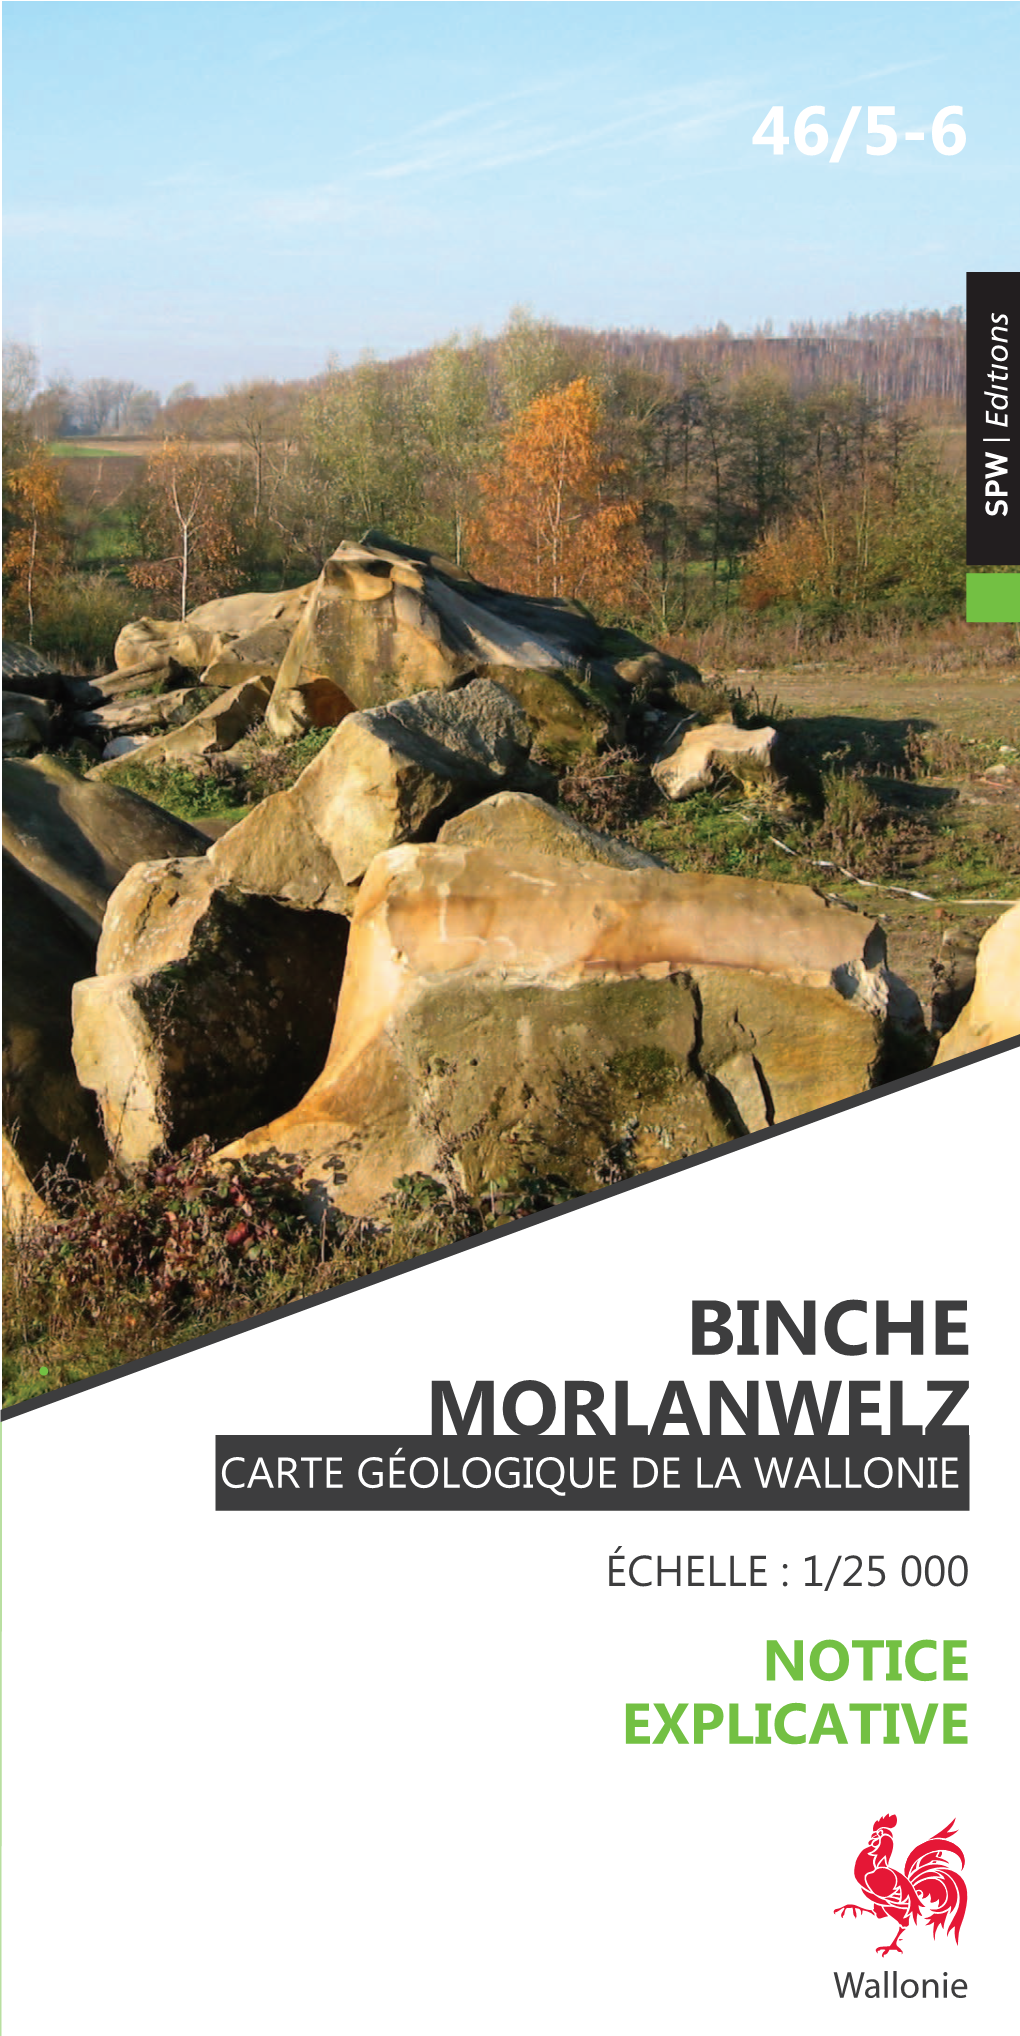 BINCHE Morlanwelz